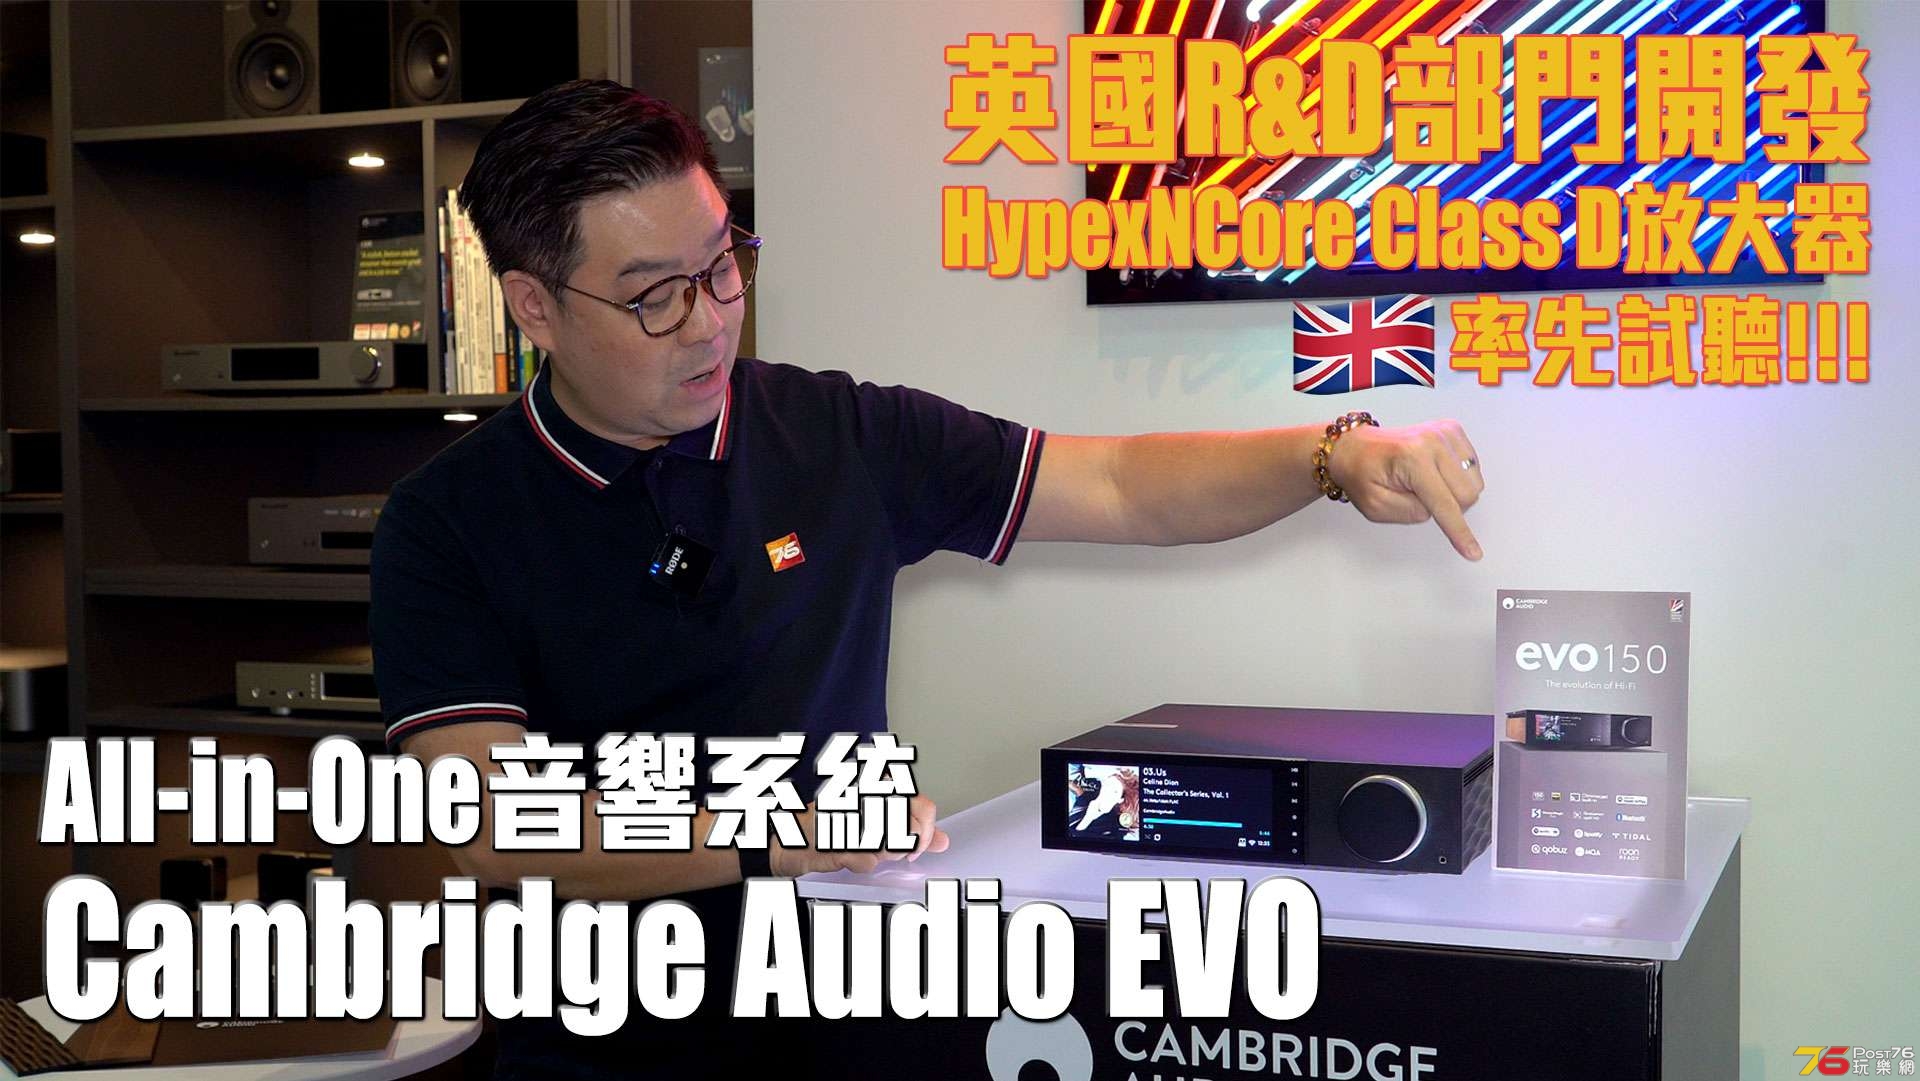 cambridge-audio-evo-all-in-one-hifi-press-forum.jpg